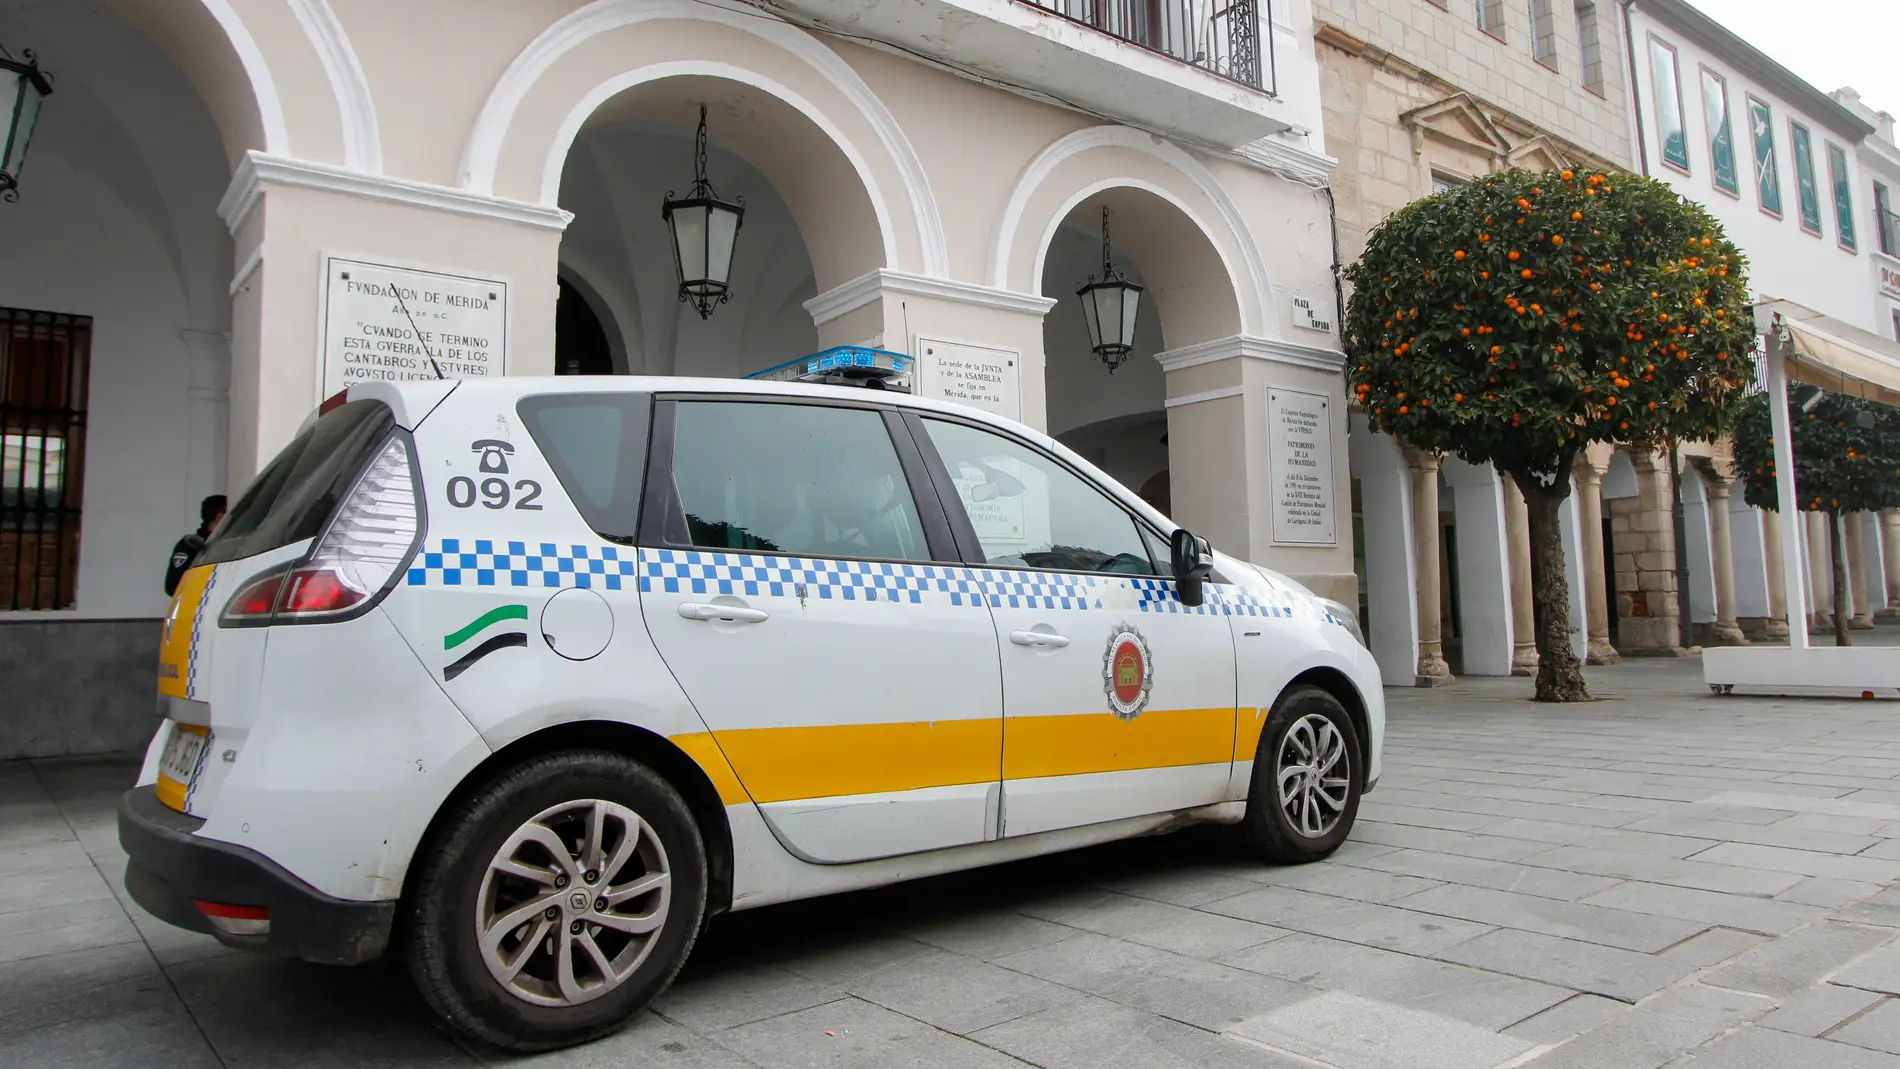 Policía Local Mérida